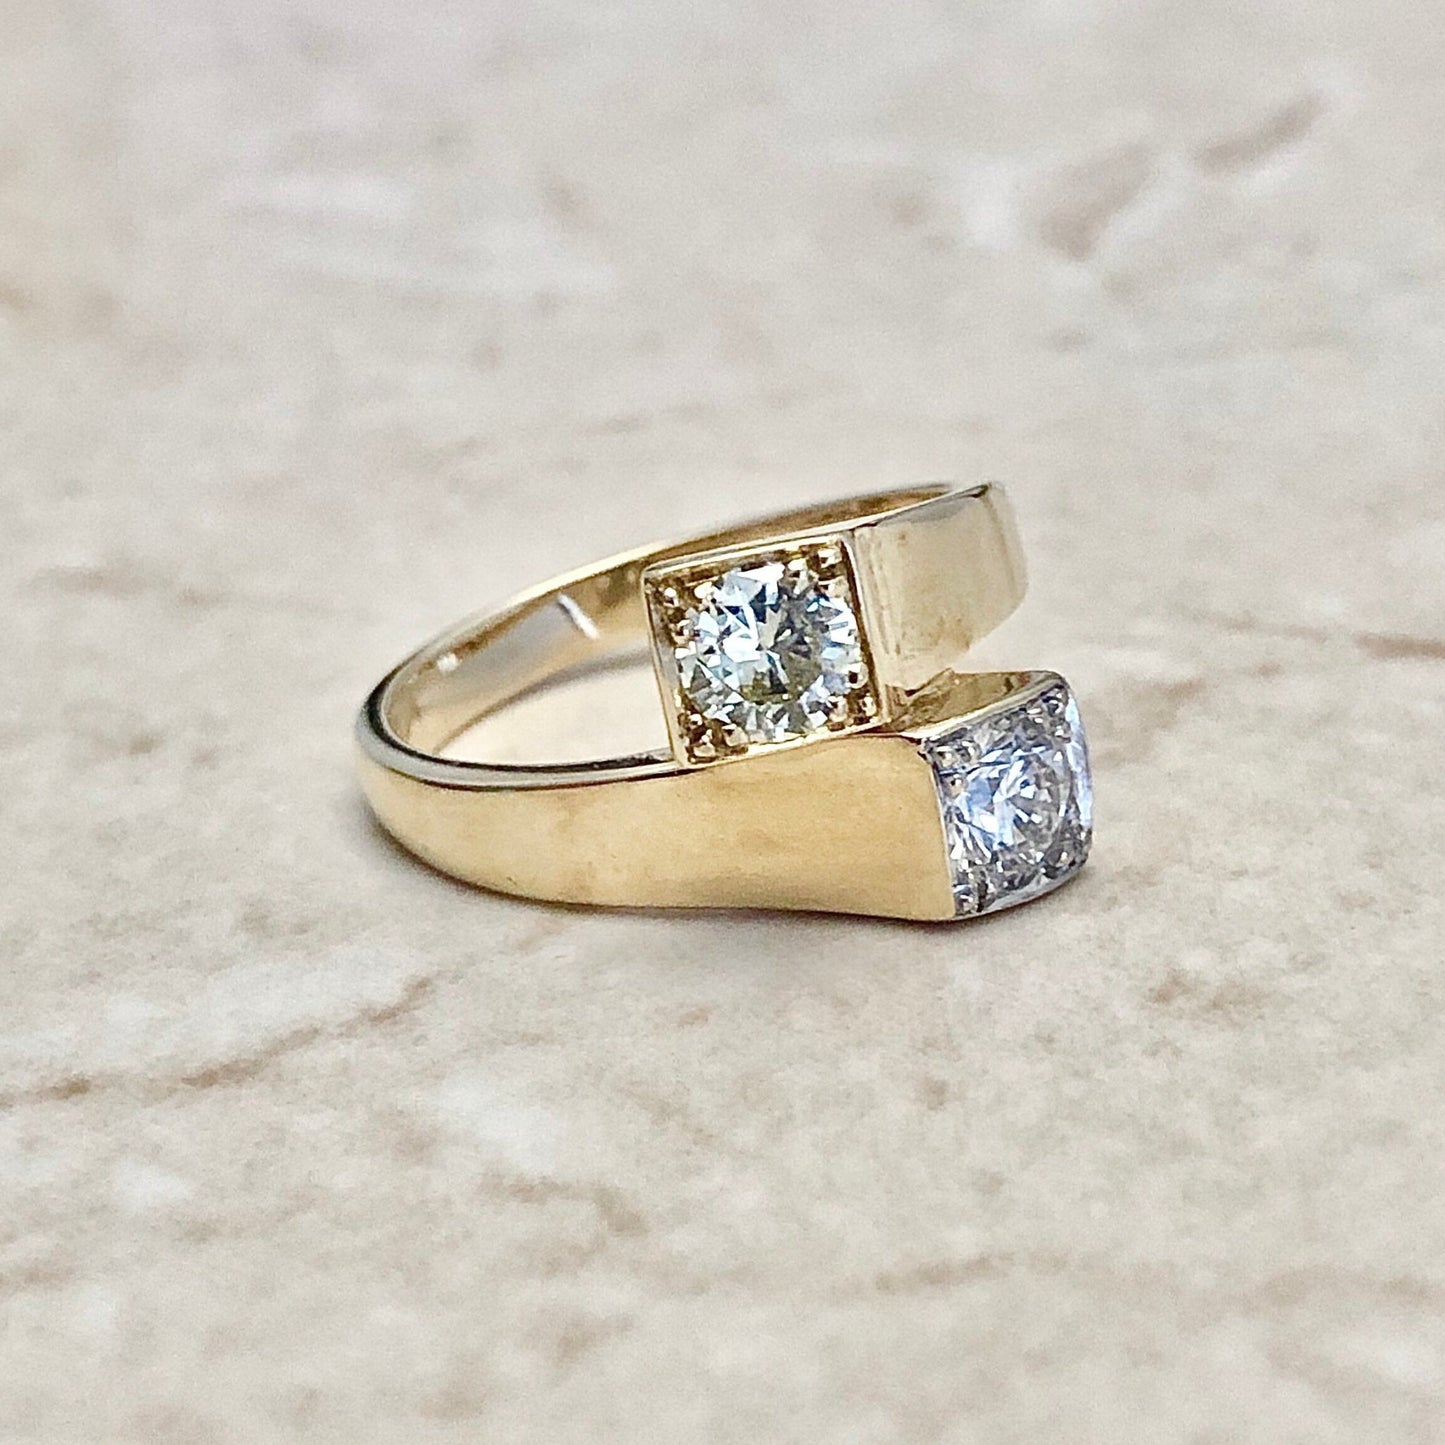 Vintage Italian Toi Et Moi Diamond & Yellow Diamond Ring - 18 Karat Yellow Gold Bypass Ring - Size 5.75 US